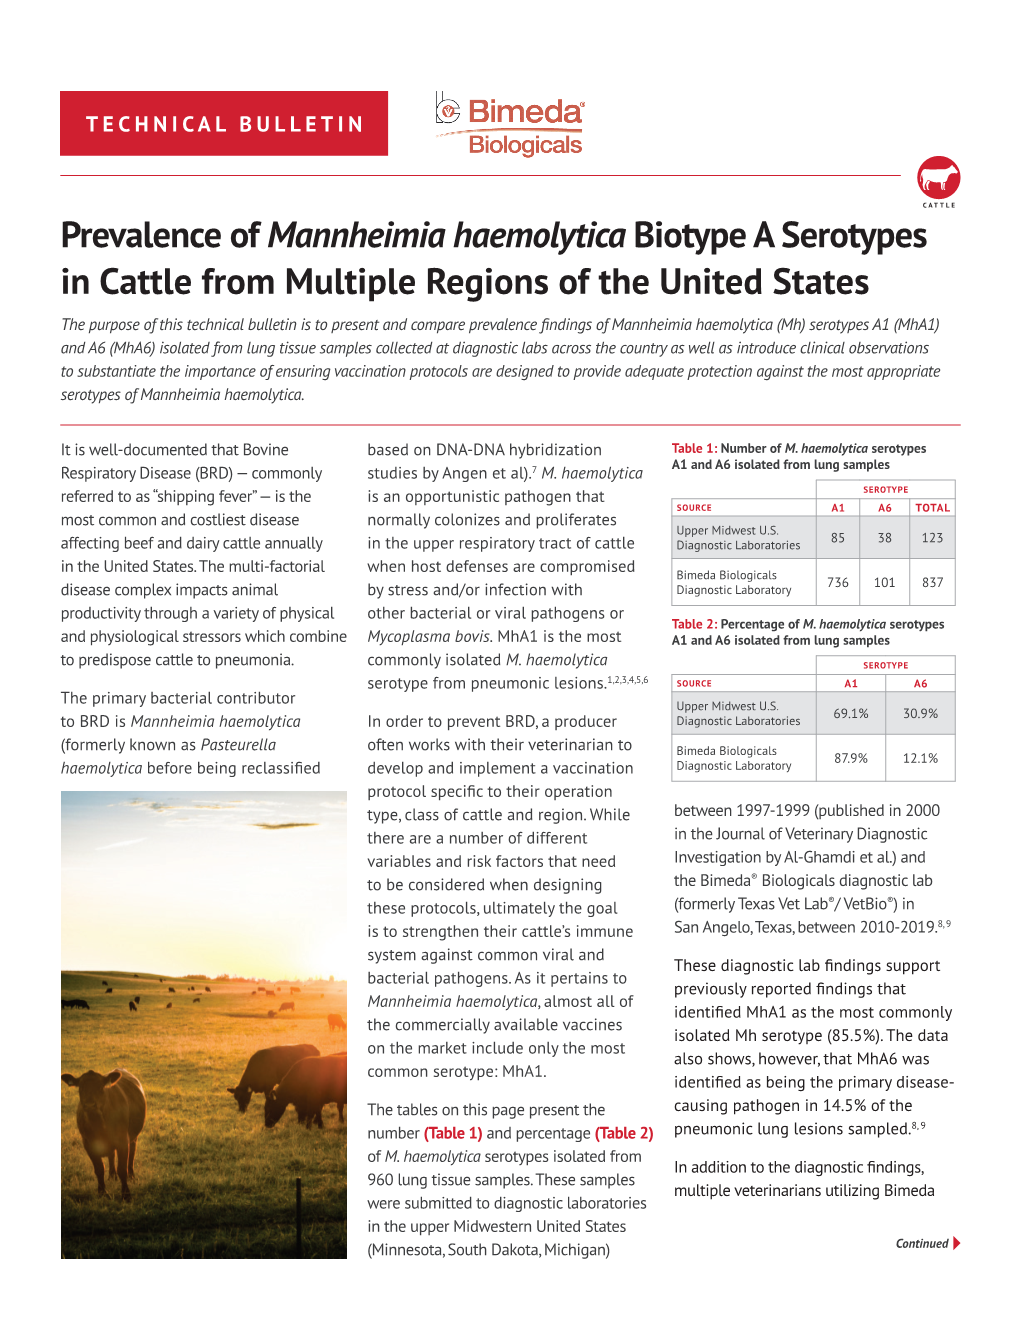 Prevalence of Mannheimia Haemolytica Biotype a Serotypes In